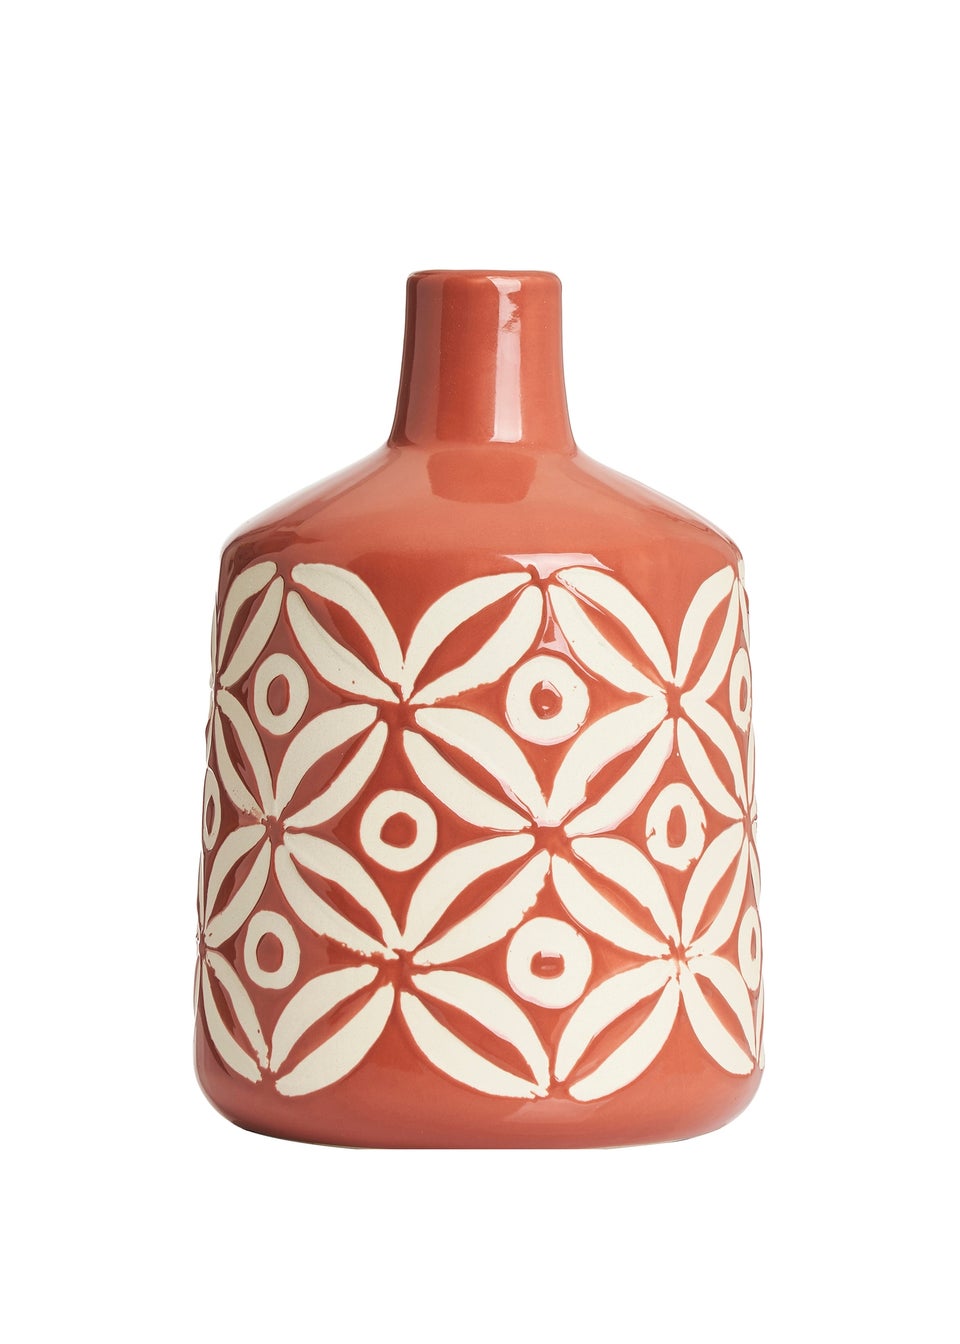 BHS Small Patterned Ceramic Vase Terracotta